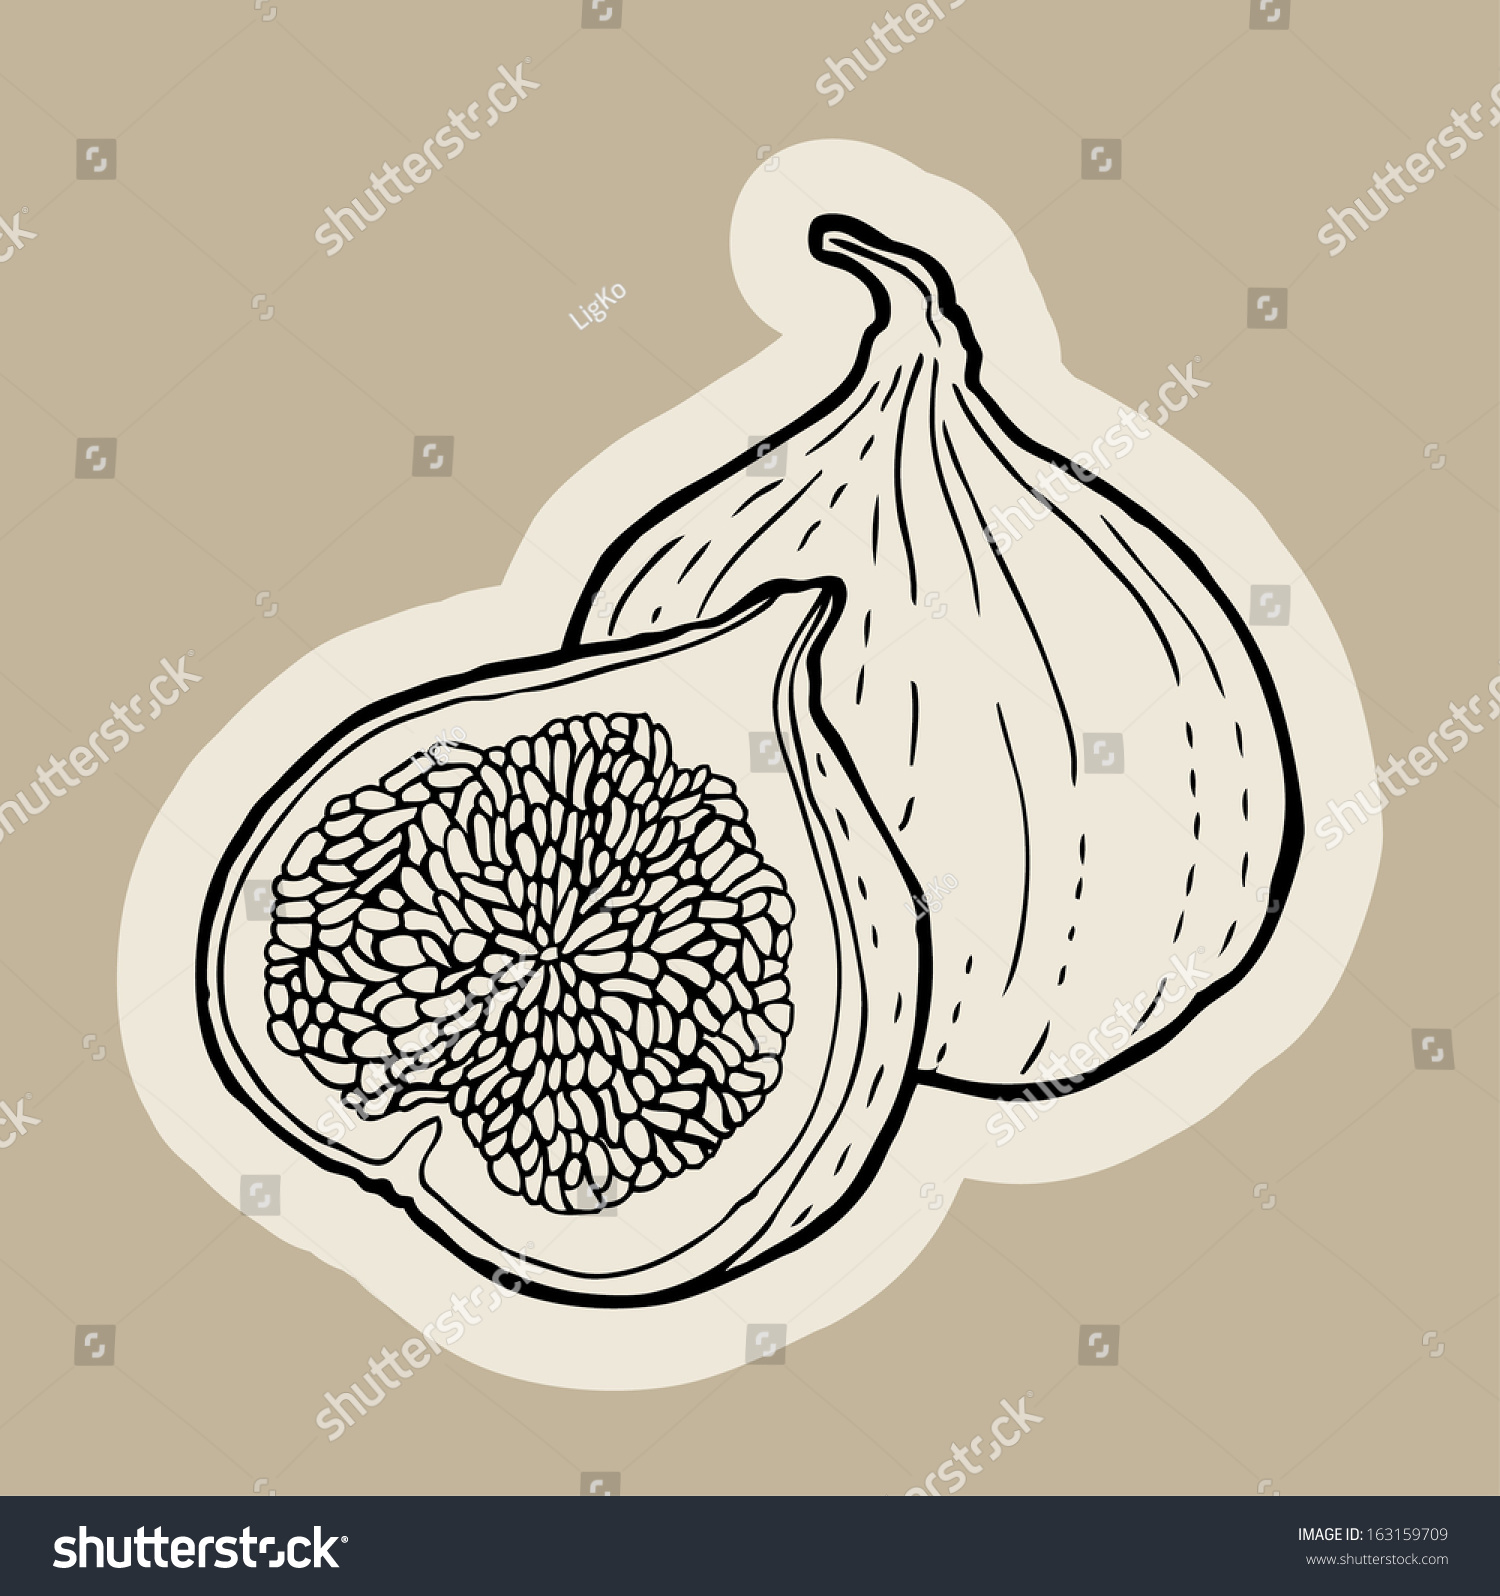 Figs Cartoon Vector Stock Vector 163159709 - Shutterstock